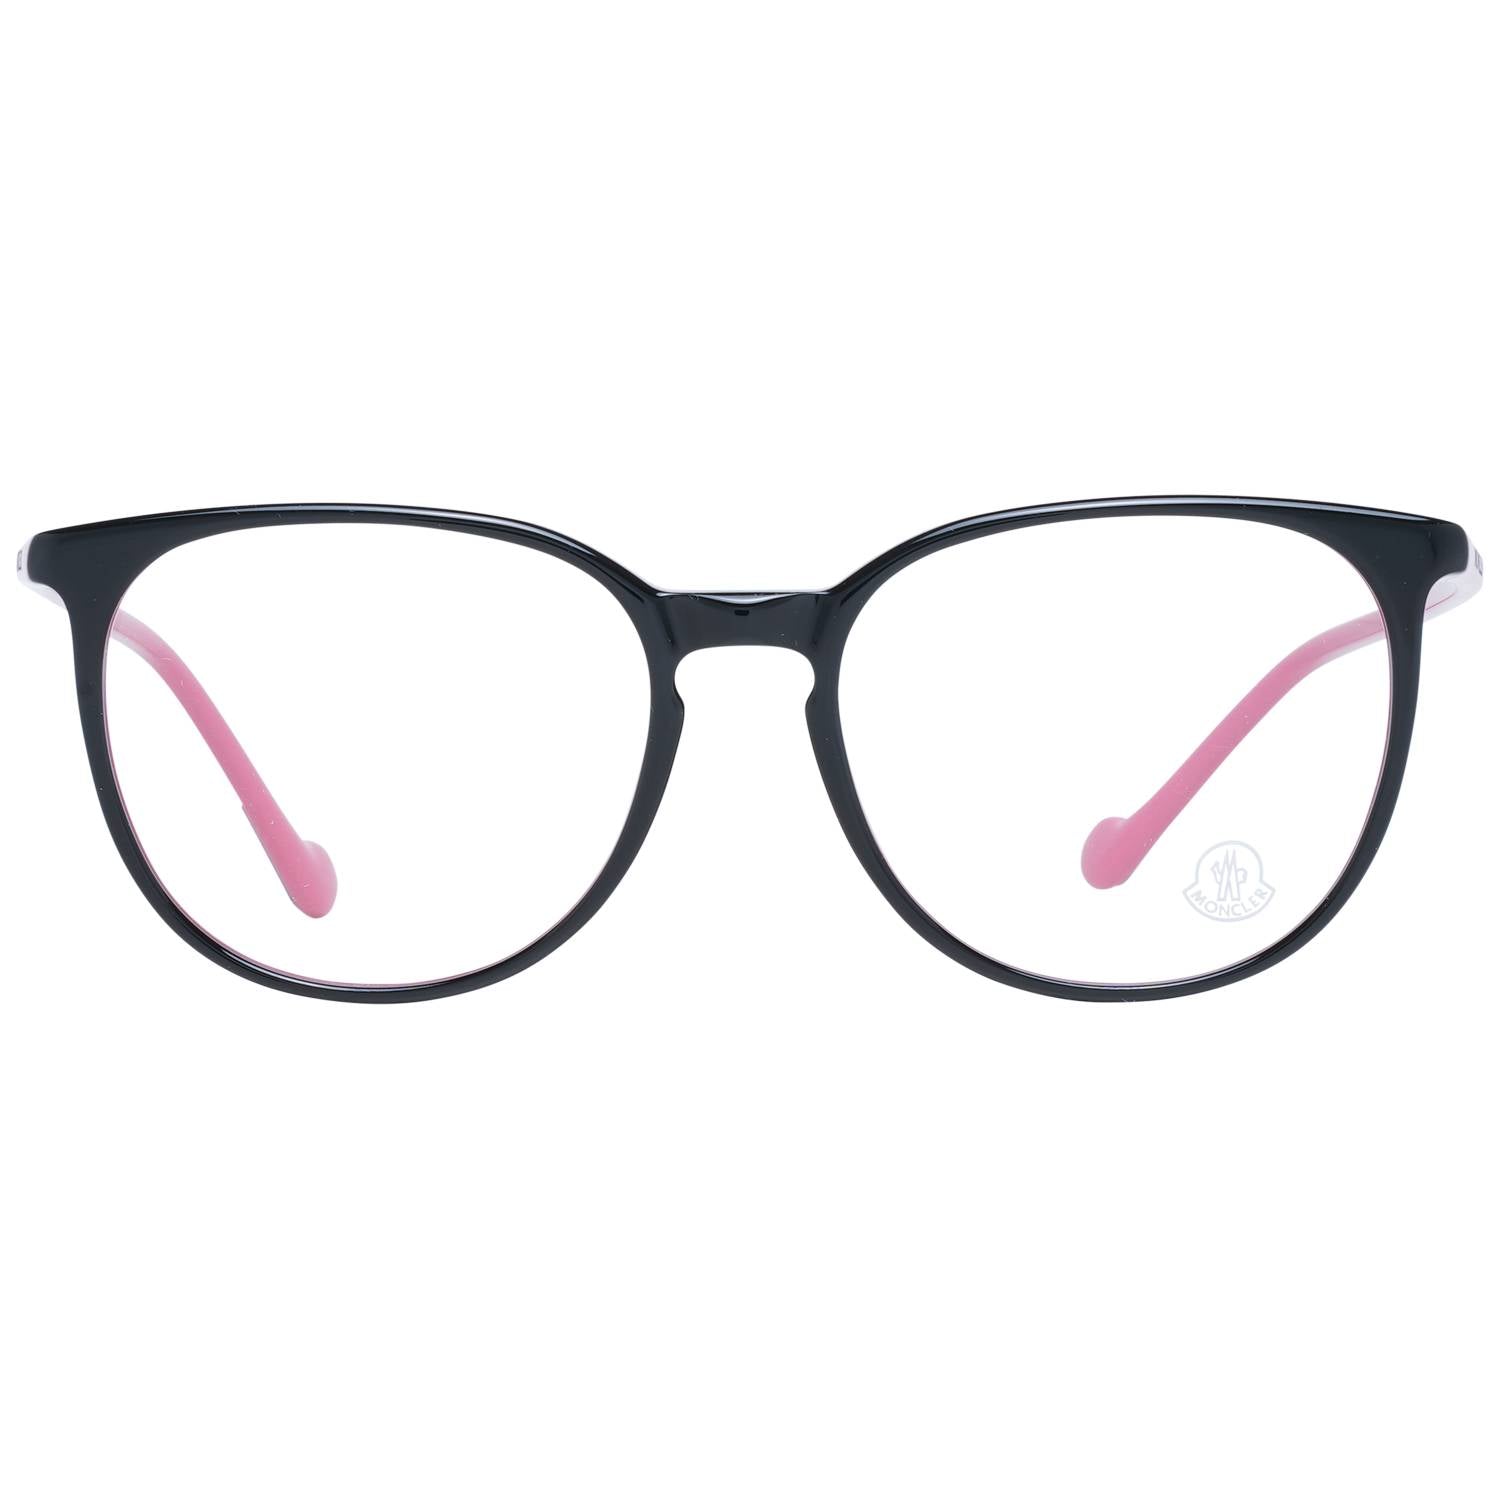 Moncler Eyeglasses Moncler Glasses Frames ML5089 05A 54mm Eyeglasses Eyewear UK USA Australia 